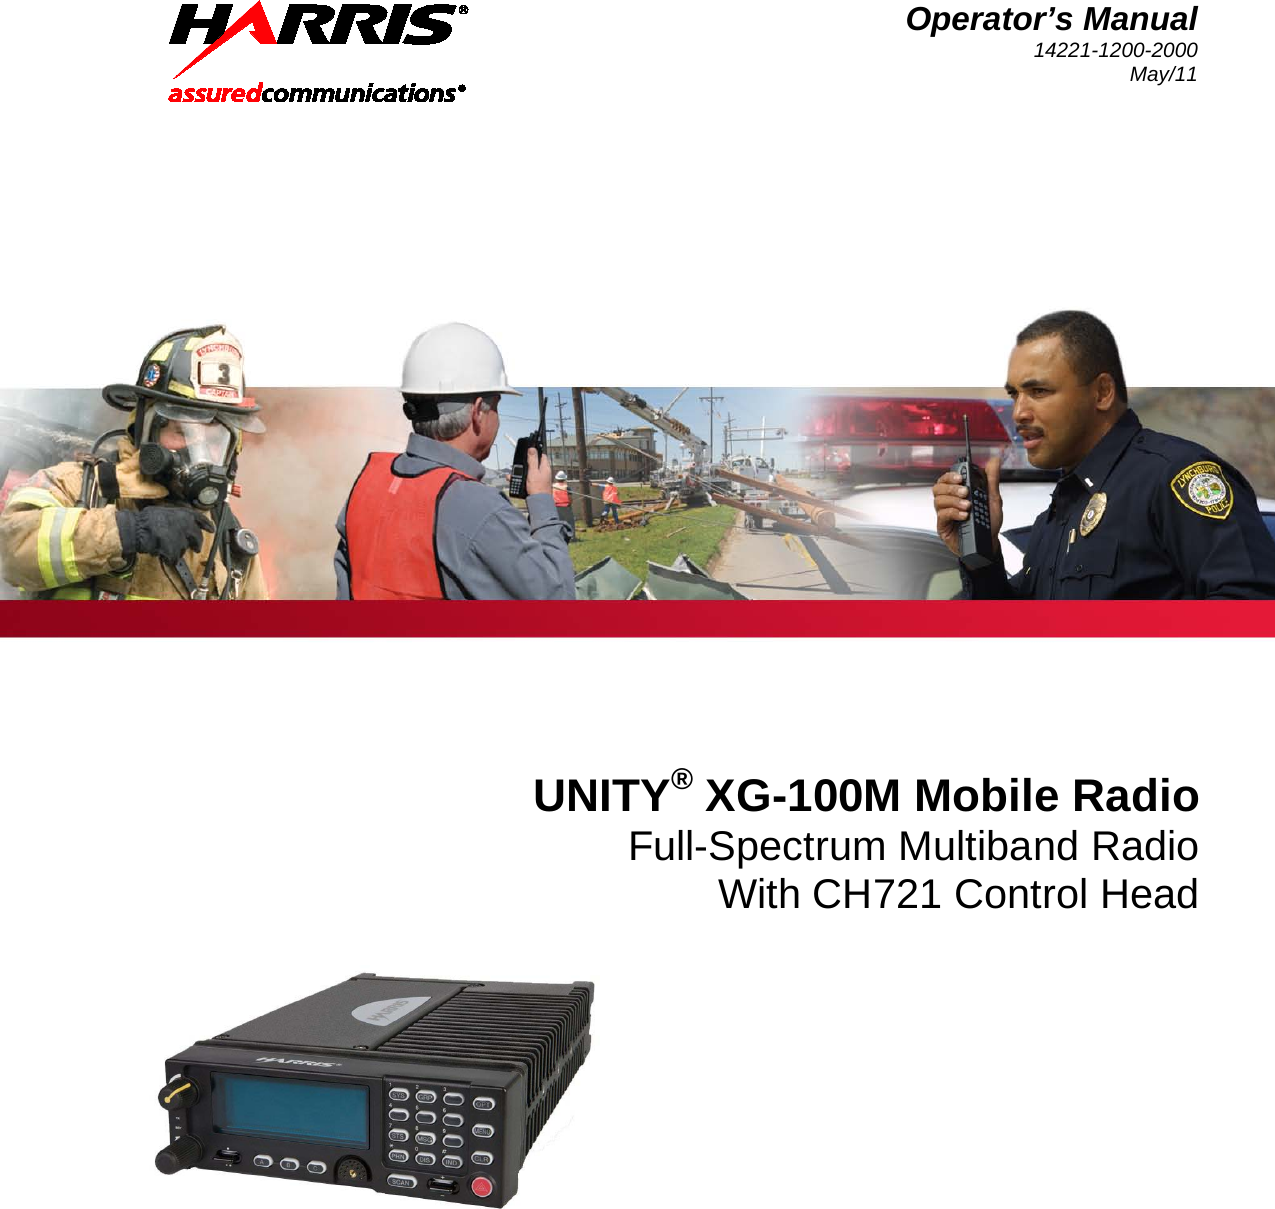  Operator’s Manual 14221-1200-2000 May/11     UNITY® XG-100M Mobile Radio Full-Spectrum Multiband Radio With CH721 Control Head   